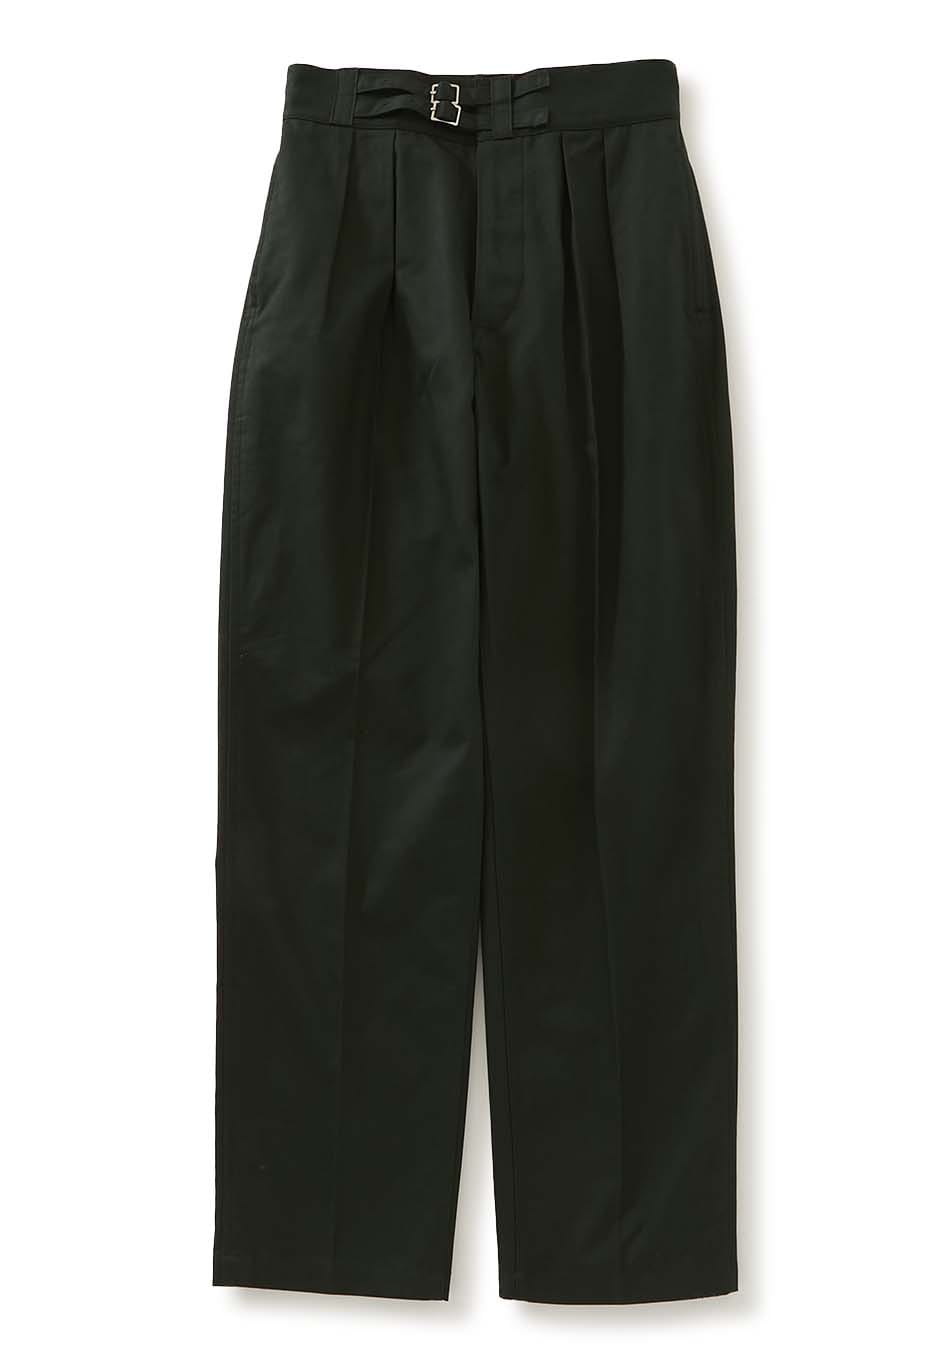 LENO | Trousers | LENO Double Belted Gurkha Trousers / Men's